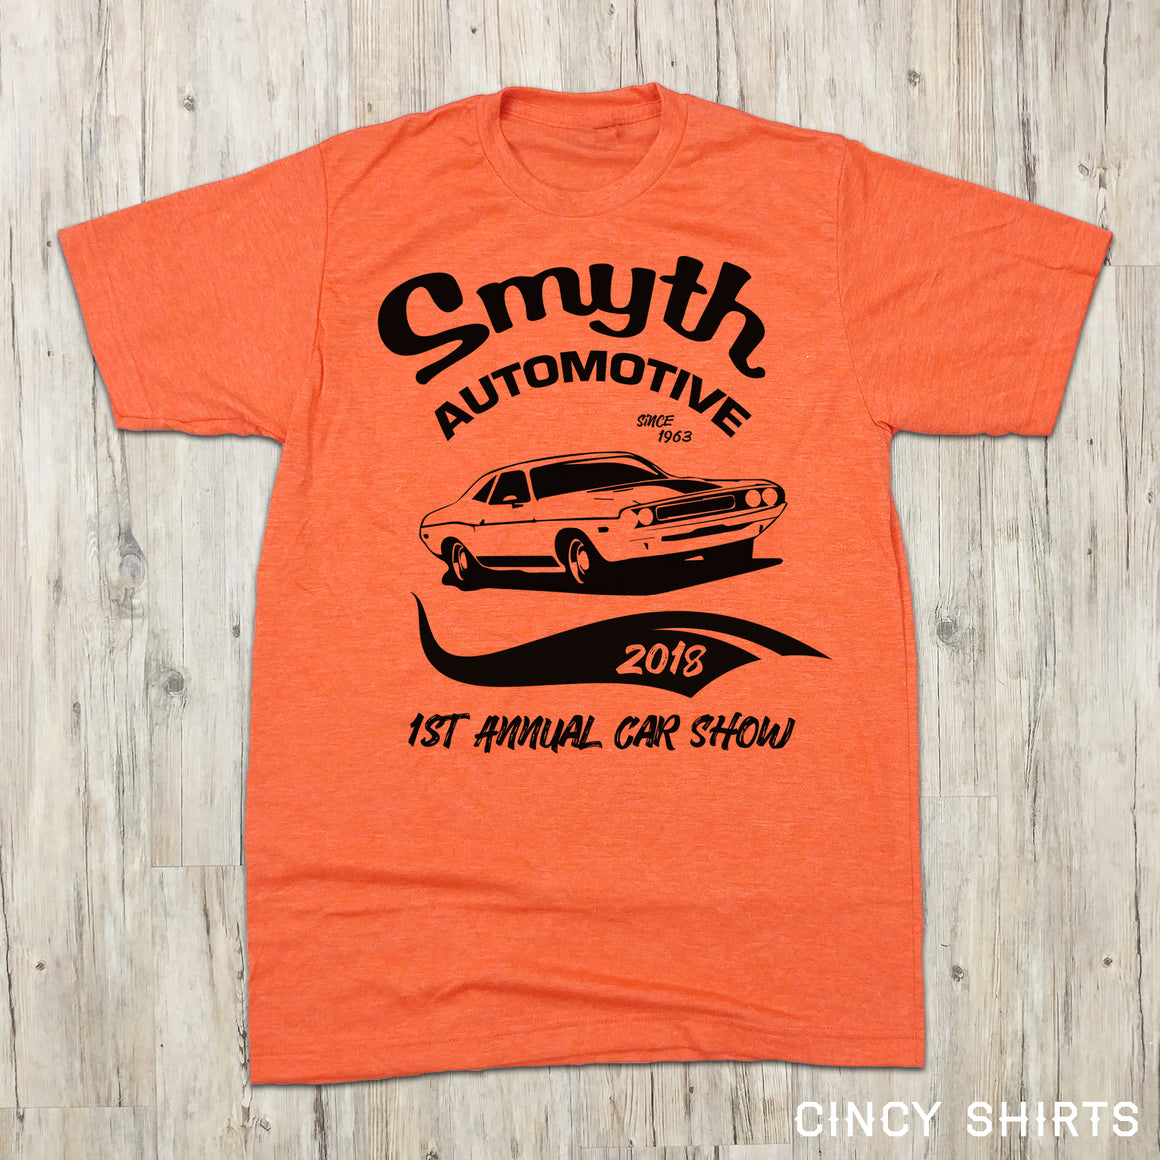 Smyth Automotive 1st Annual Car Show - Cincy Shirts